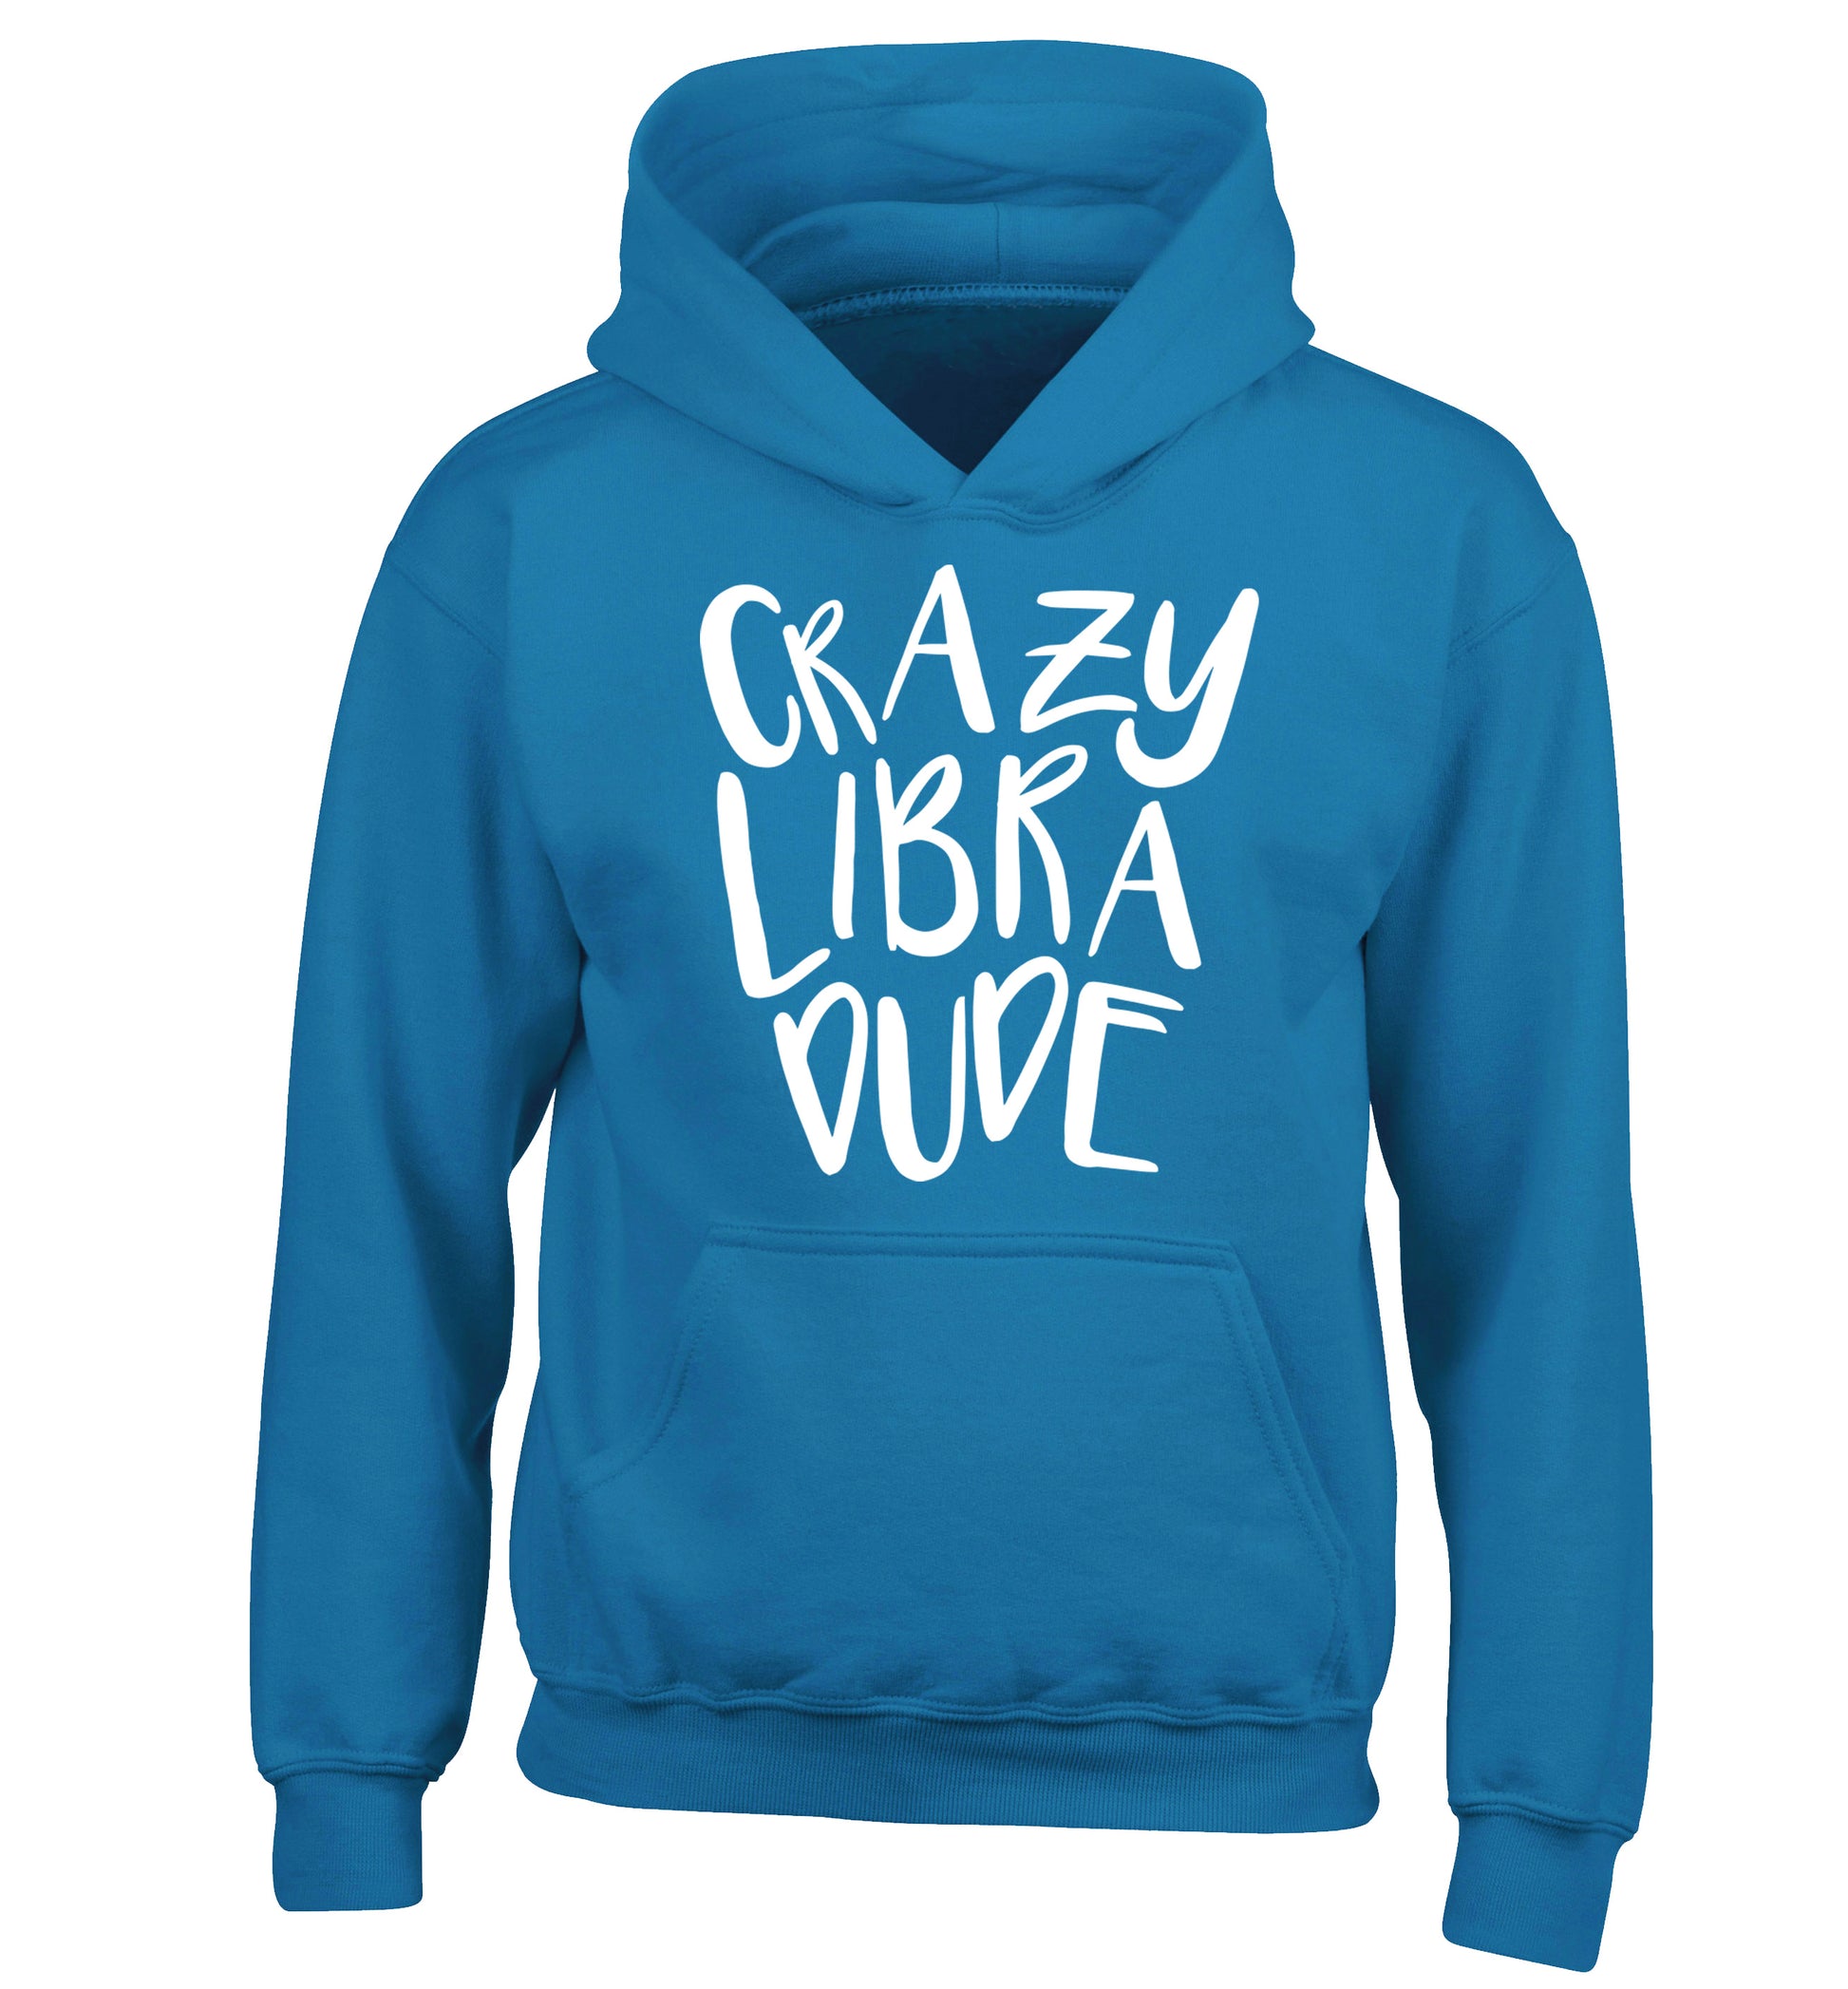 Crazy libra dude children's blue hoodie 12-13 Years